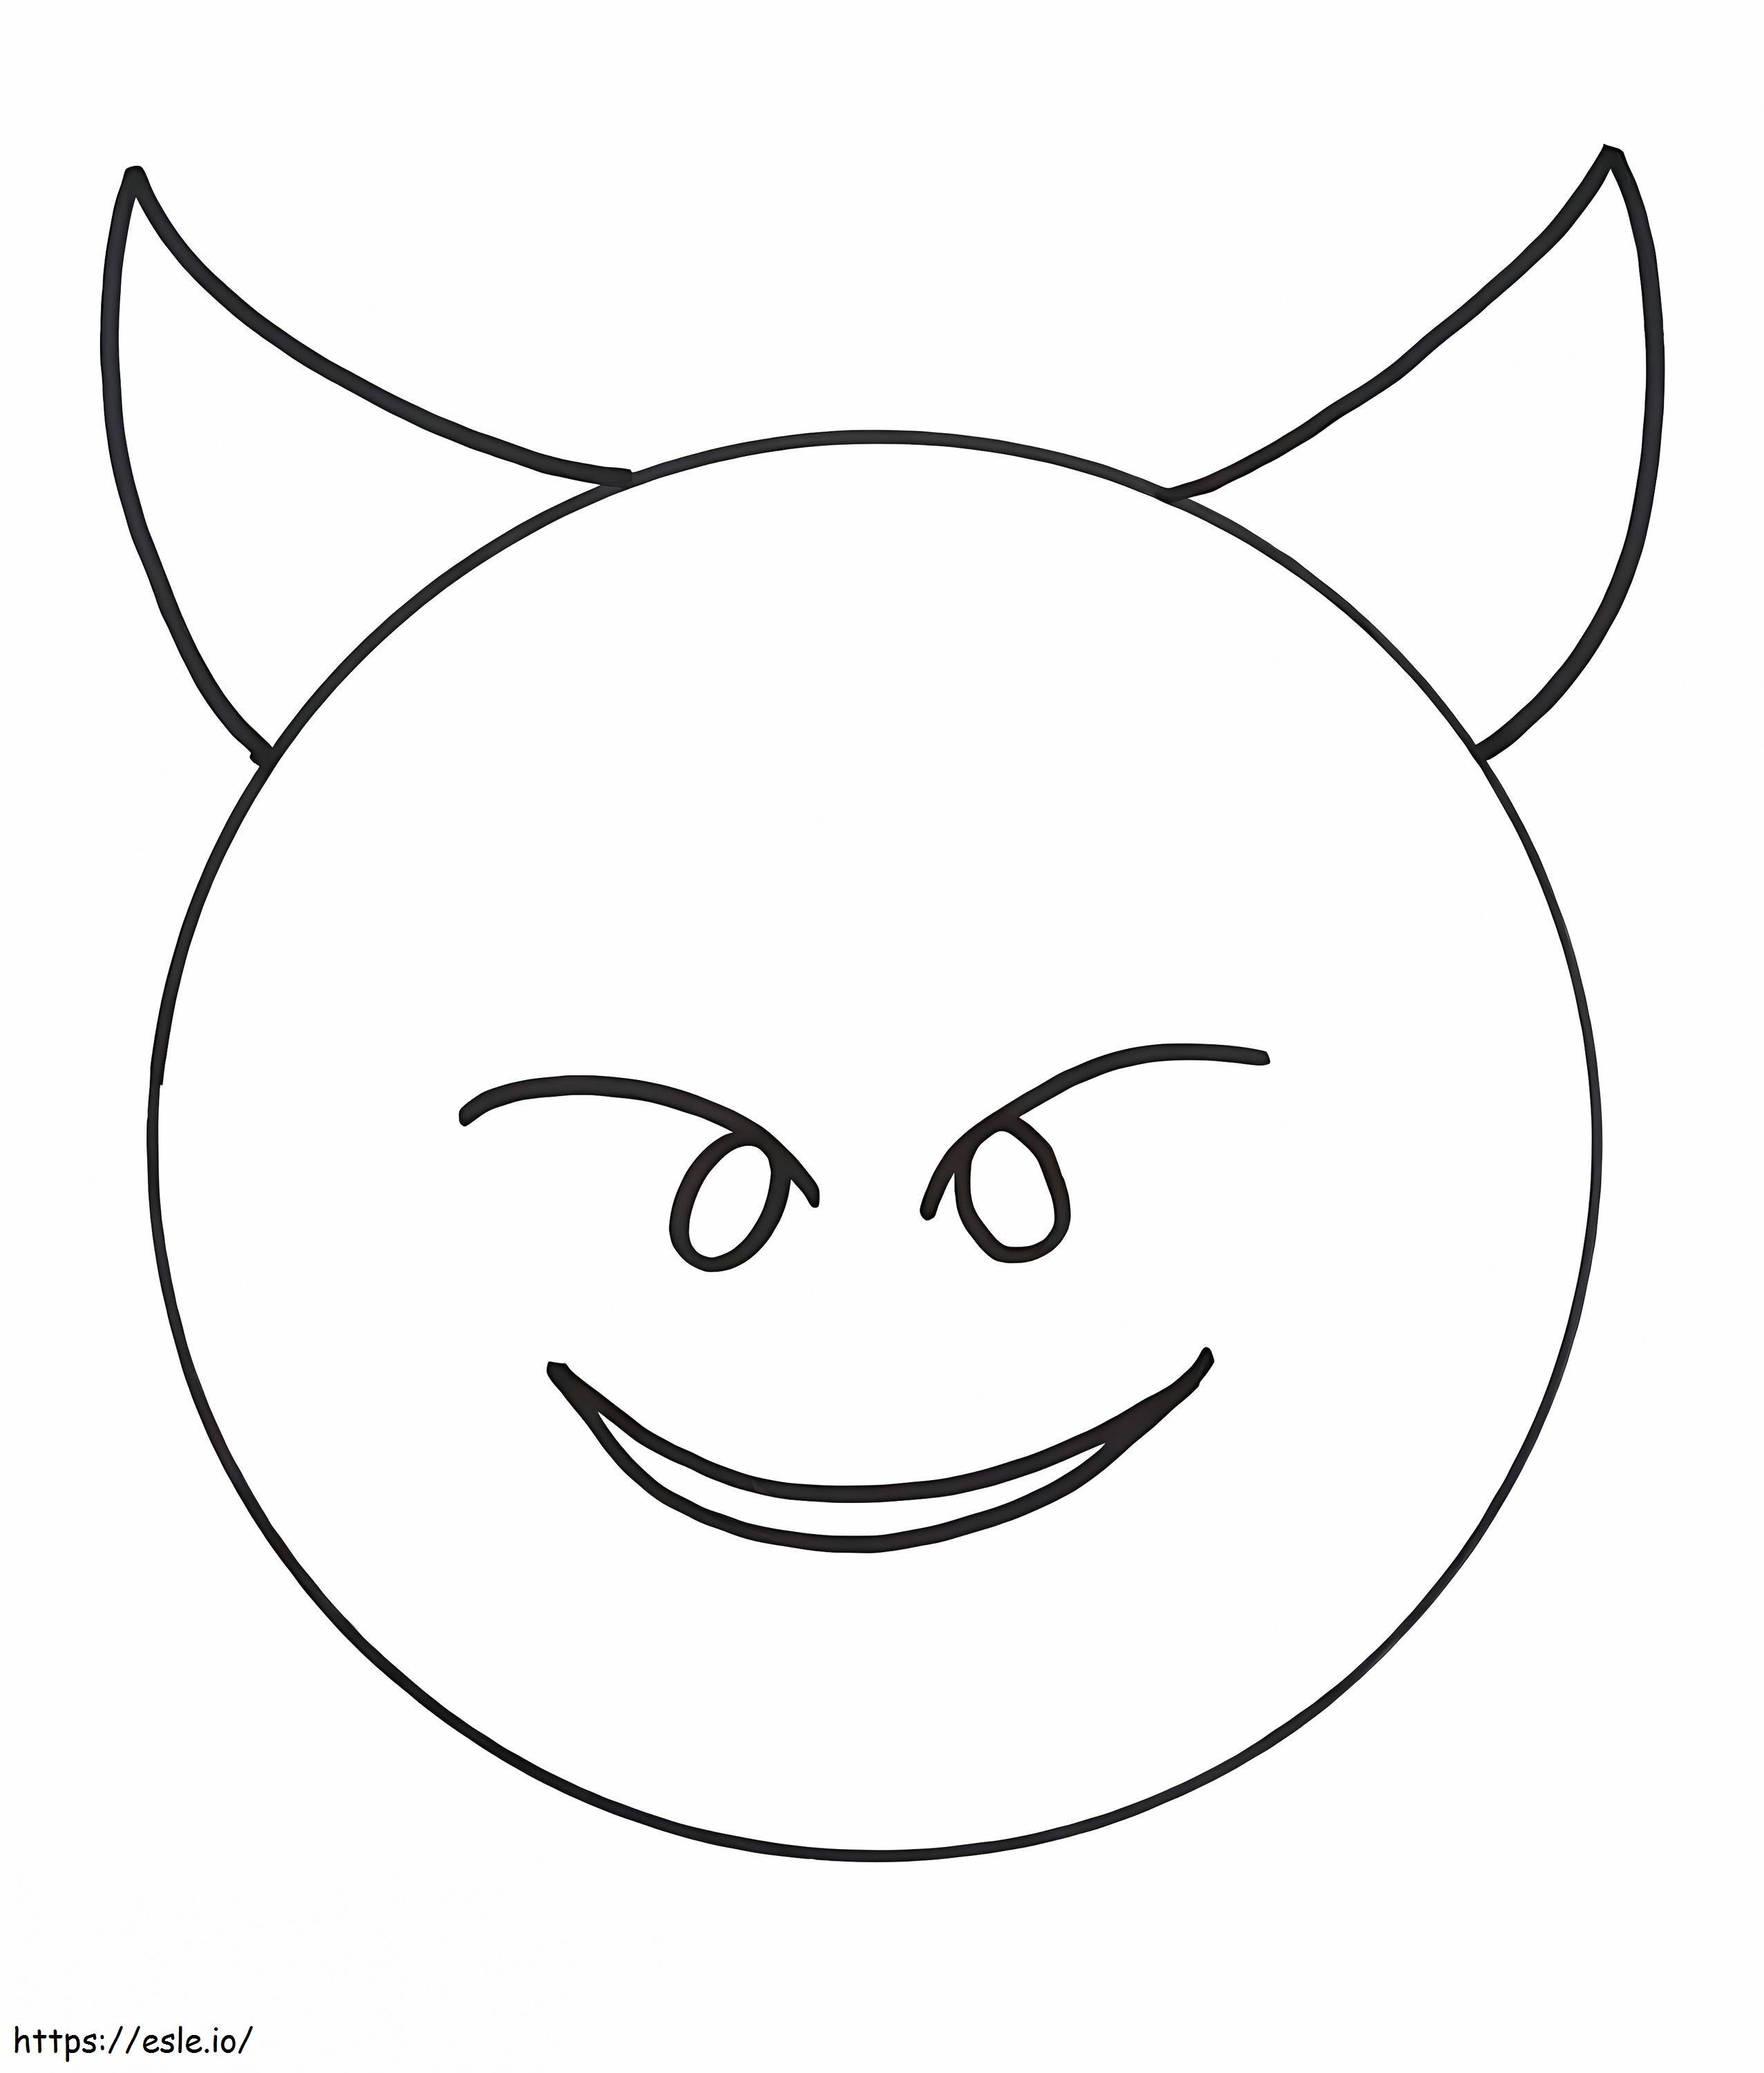 Coloriage Diable Emoji à imprimer dessin